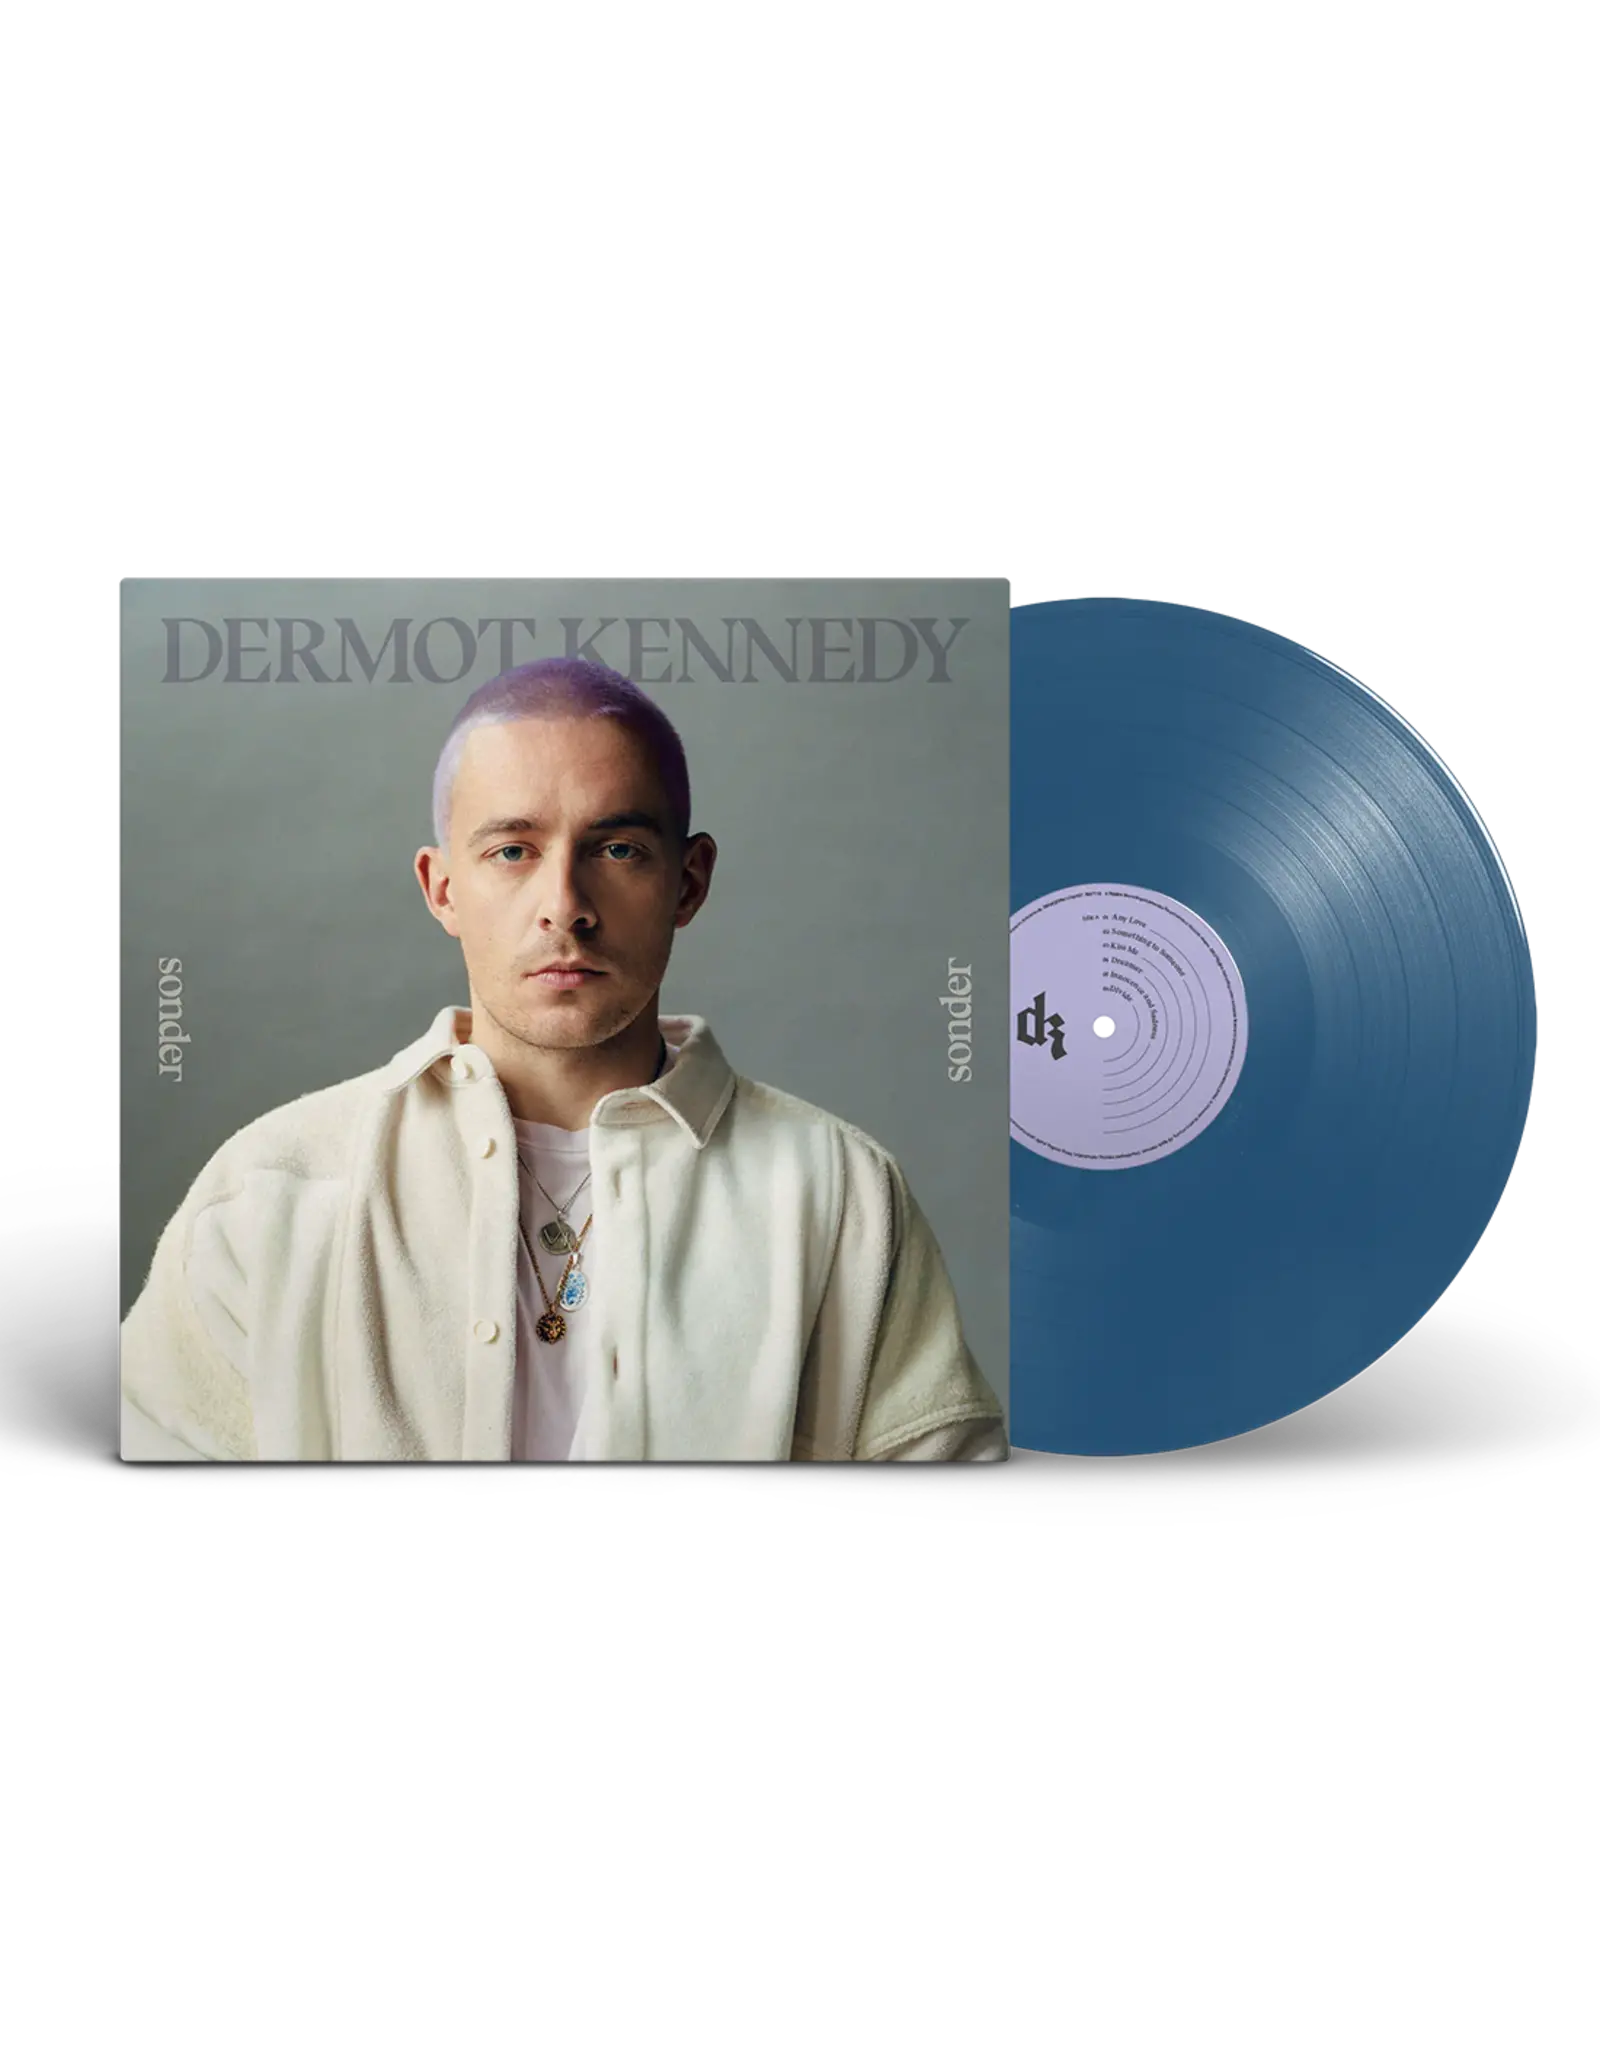 Dermot Kennedy - Sonder (Exclusive Aqua Blue Vinyl)